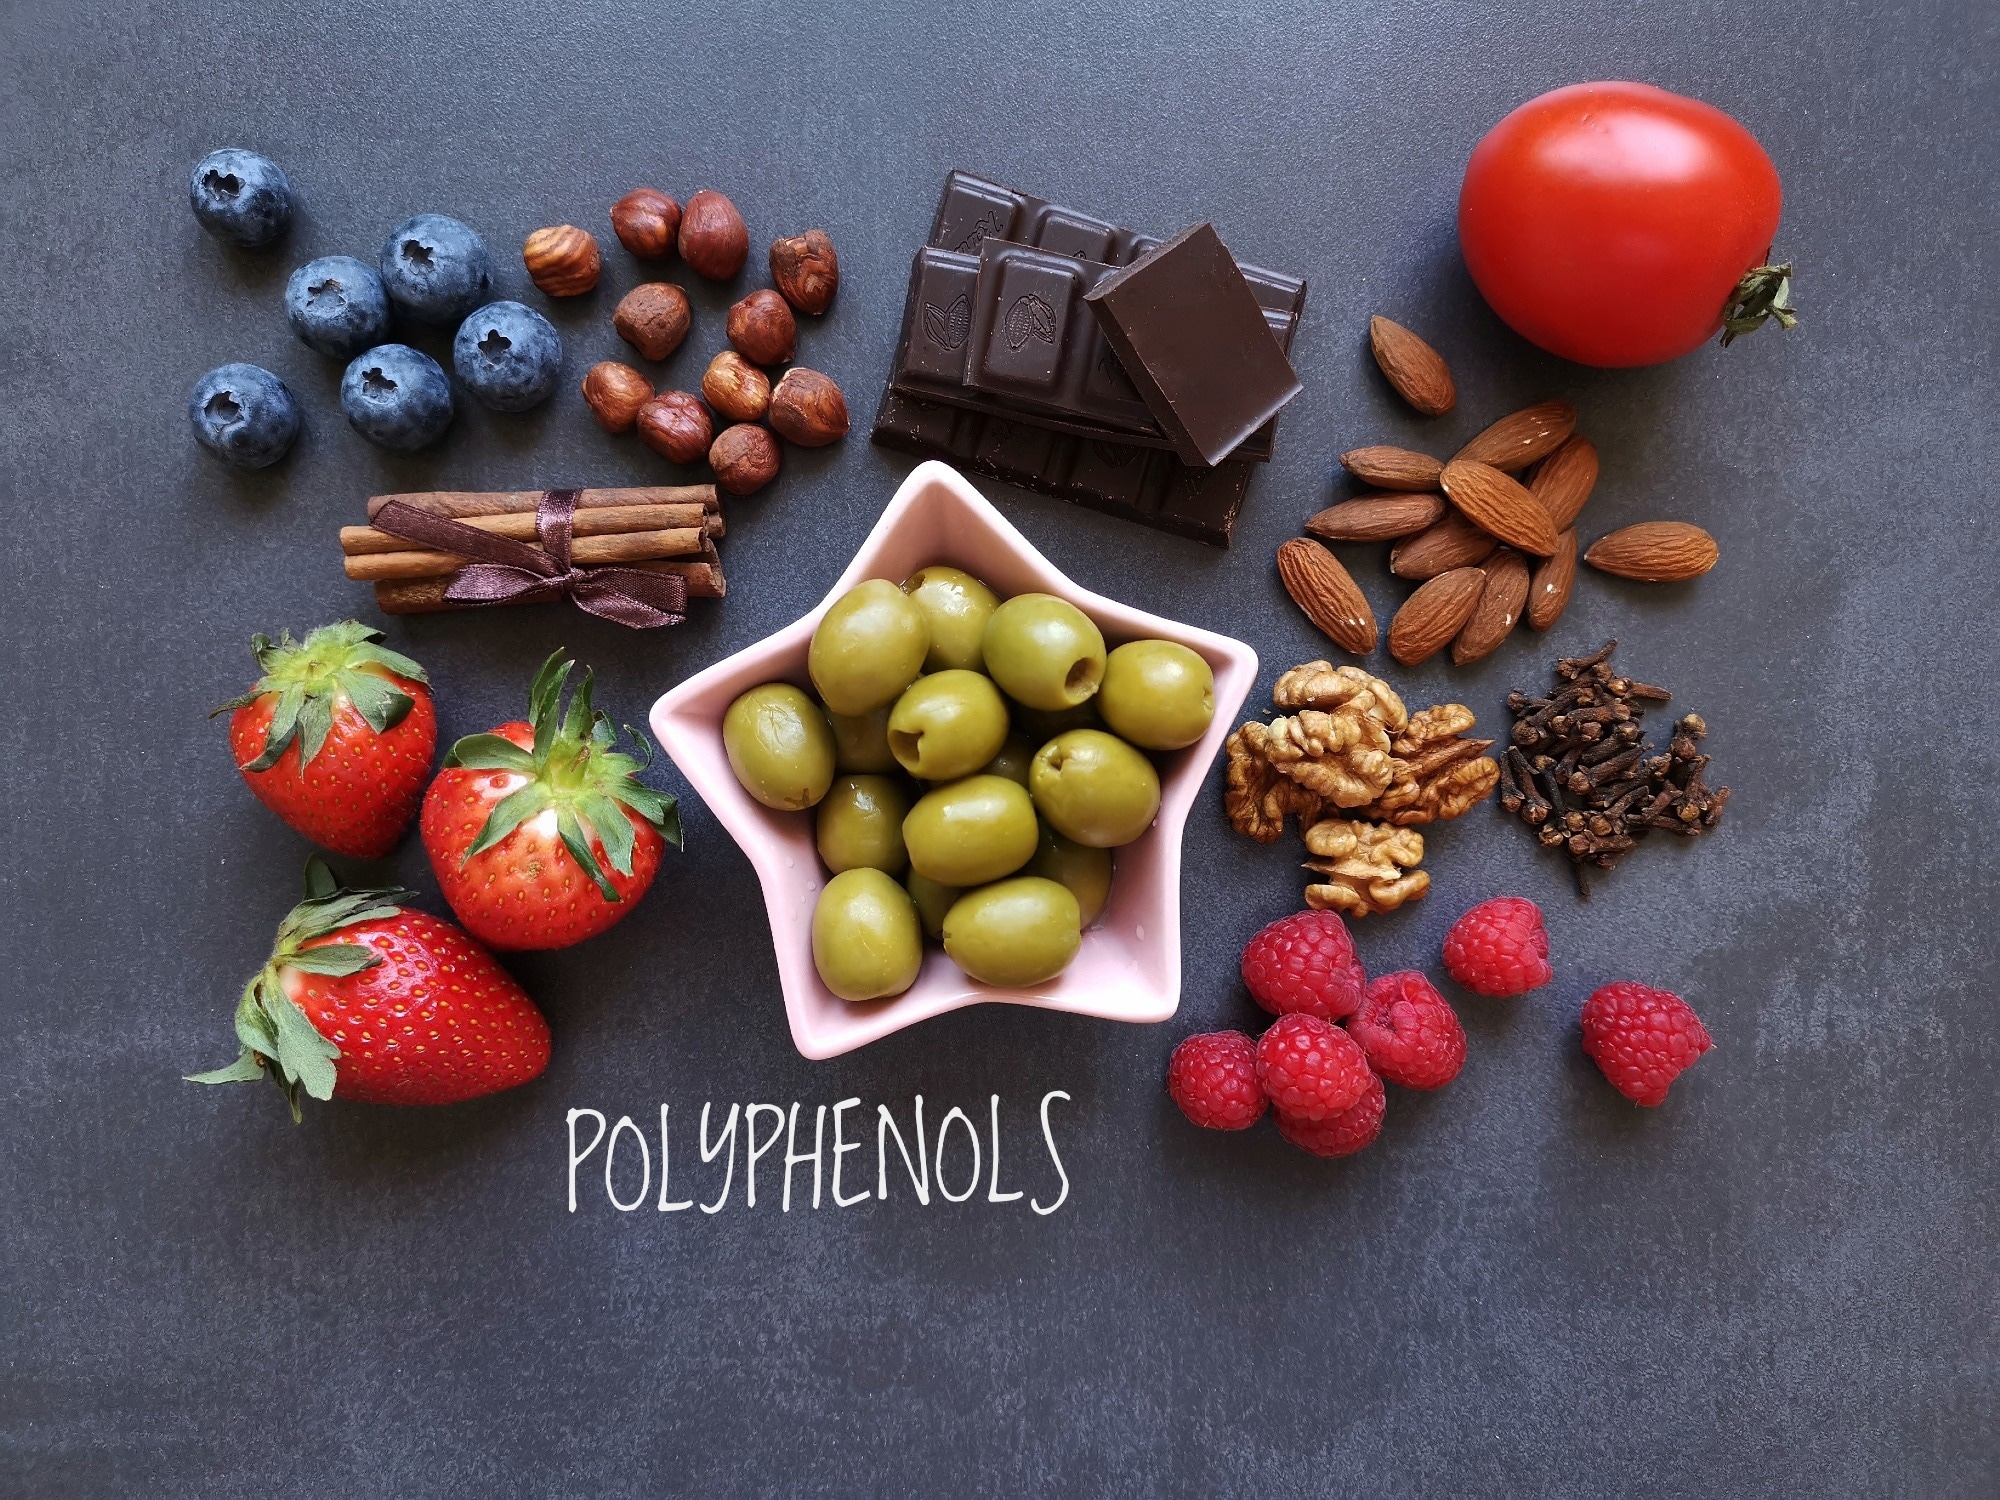 Study: Effects of Polyphenol-Rich Foods on Chronic Diseases. Image Credit: Danijela Maksimovic/Shutterstock.com